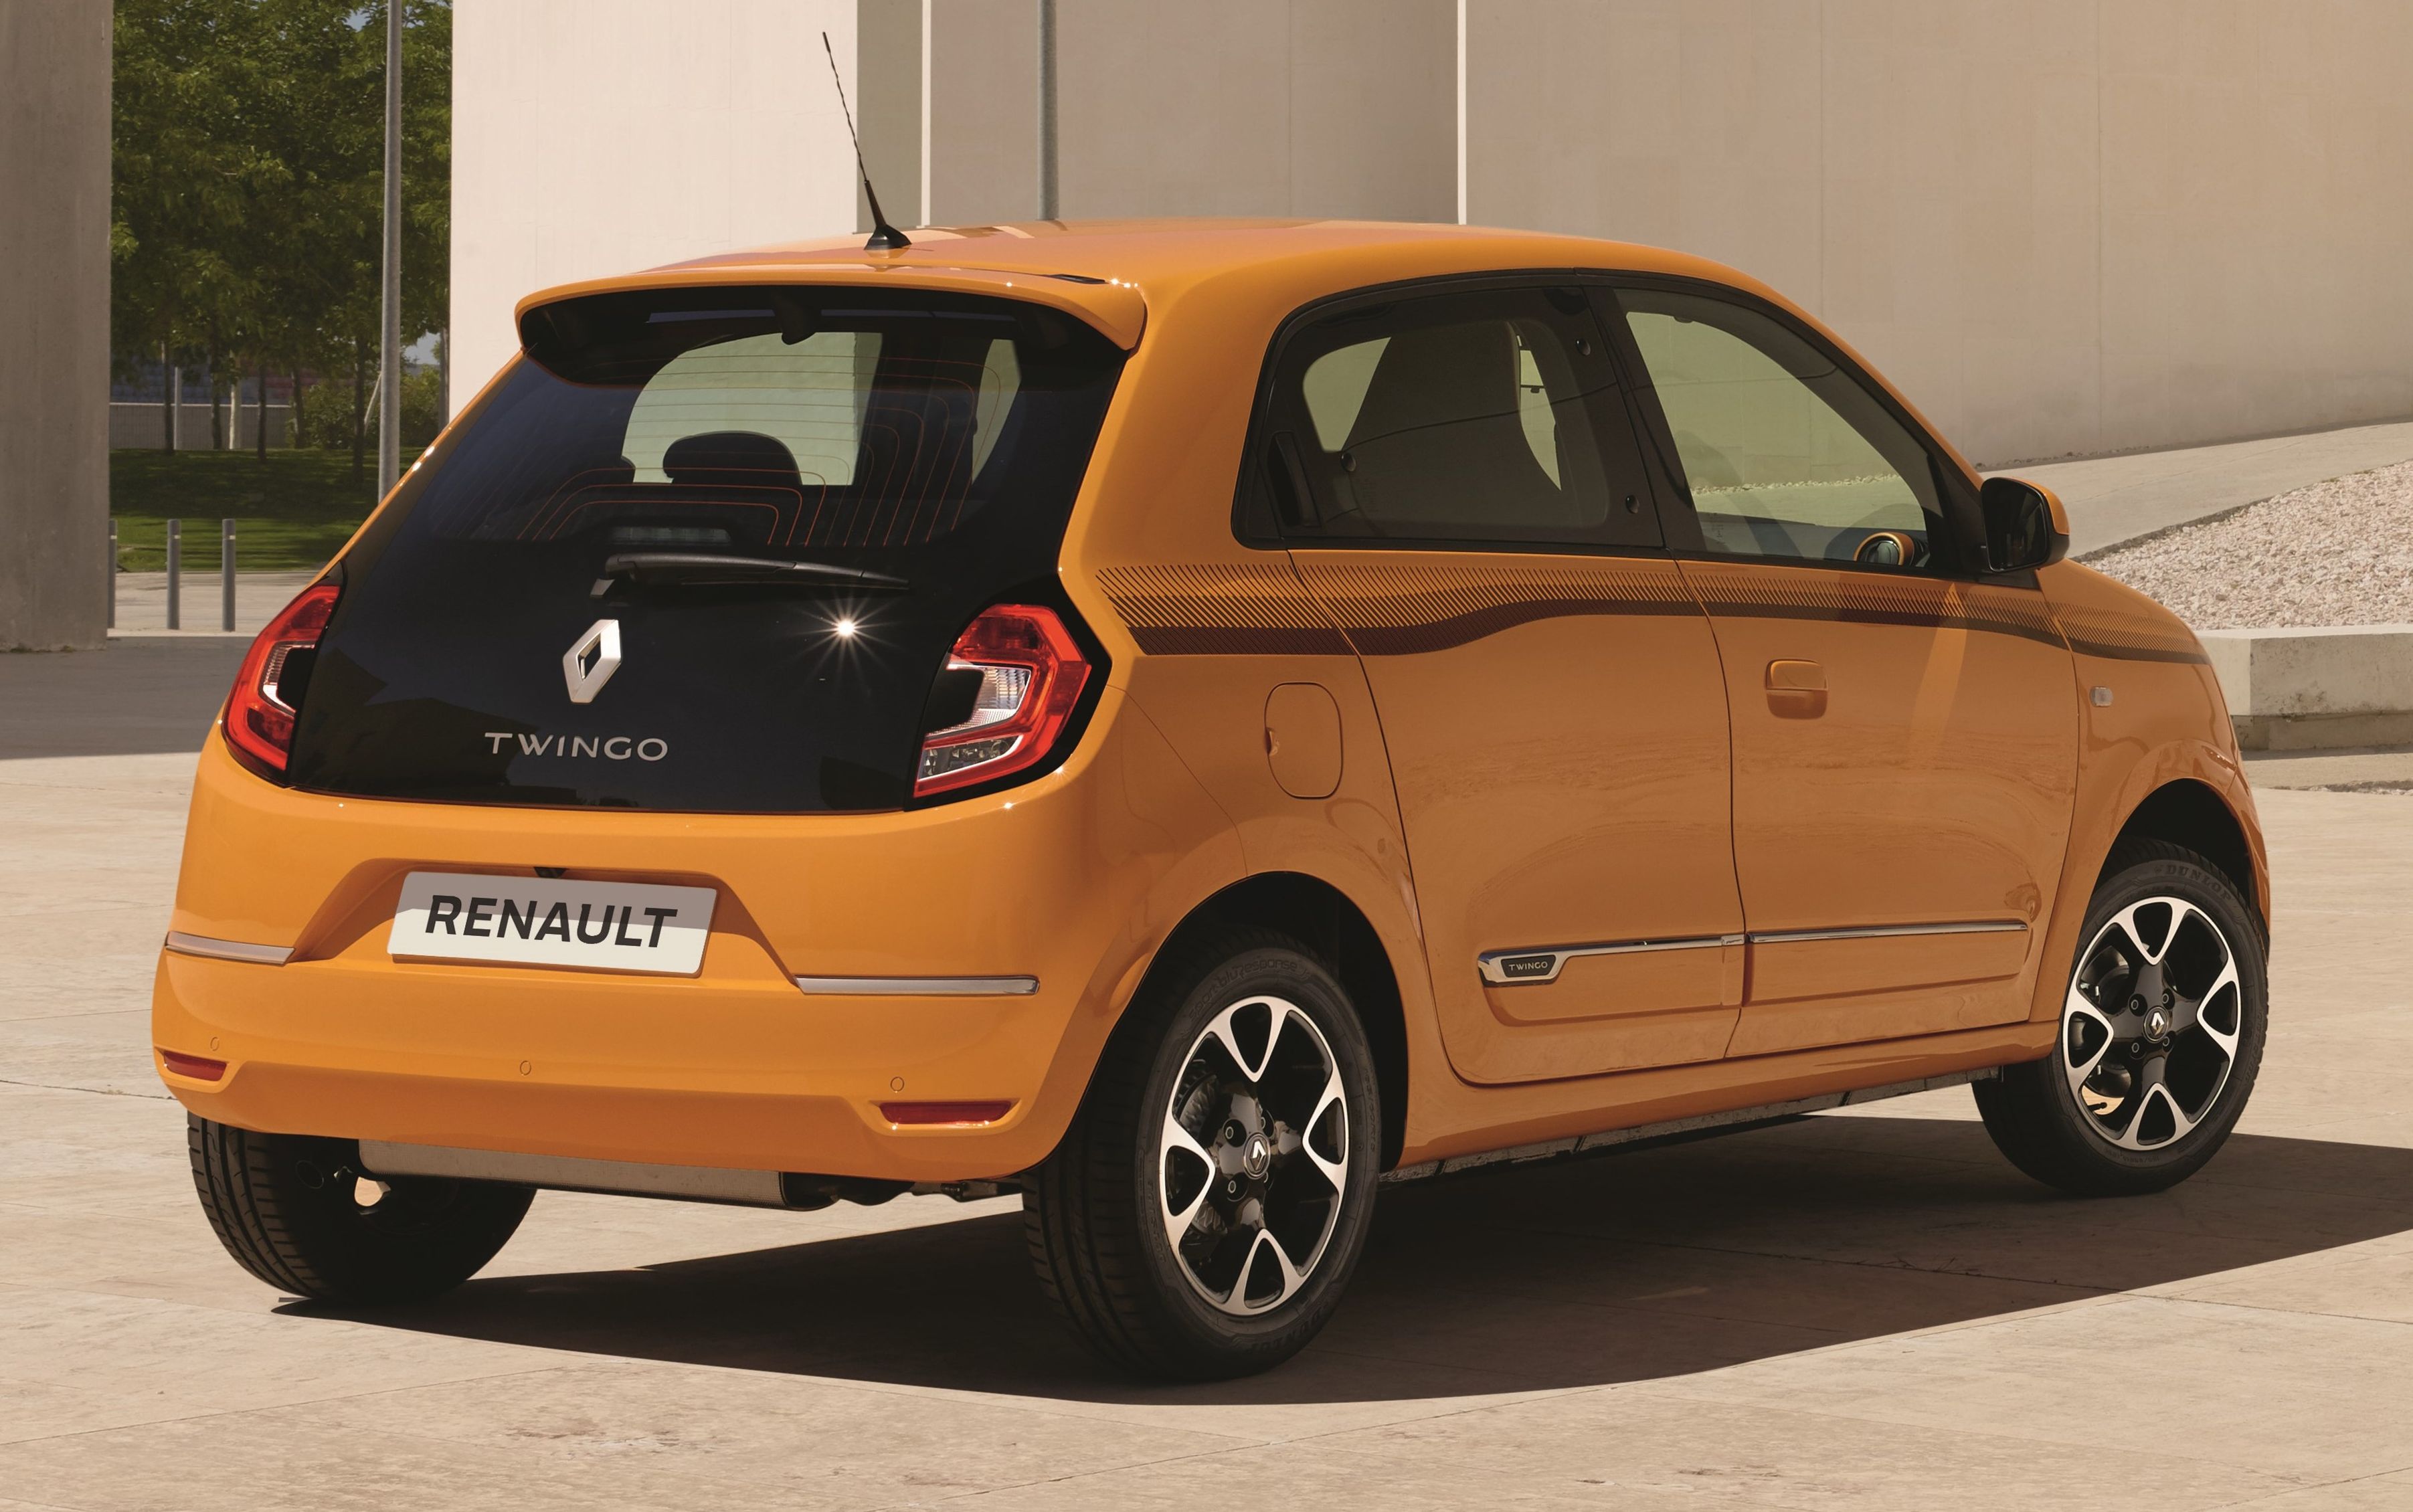 Renault Twingo accessories model